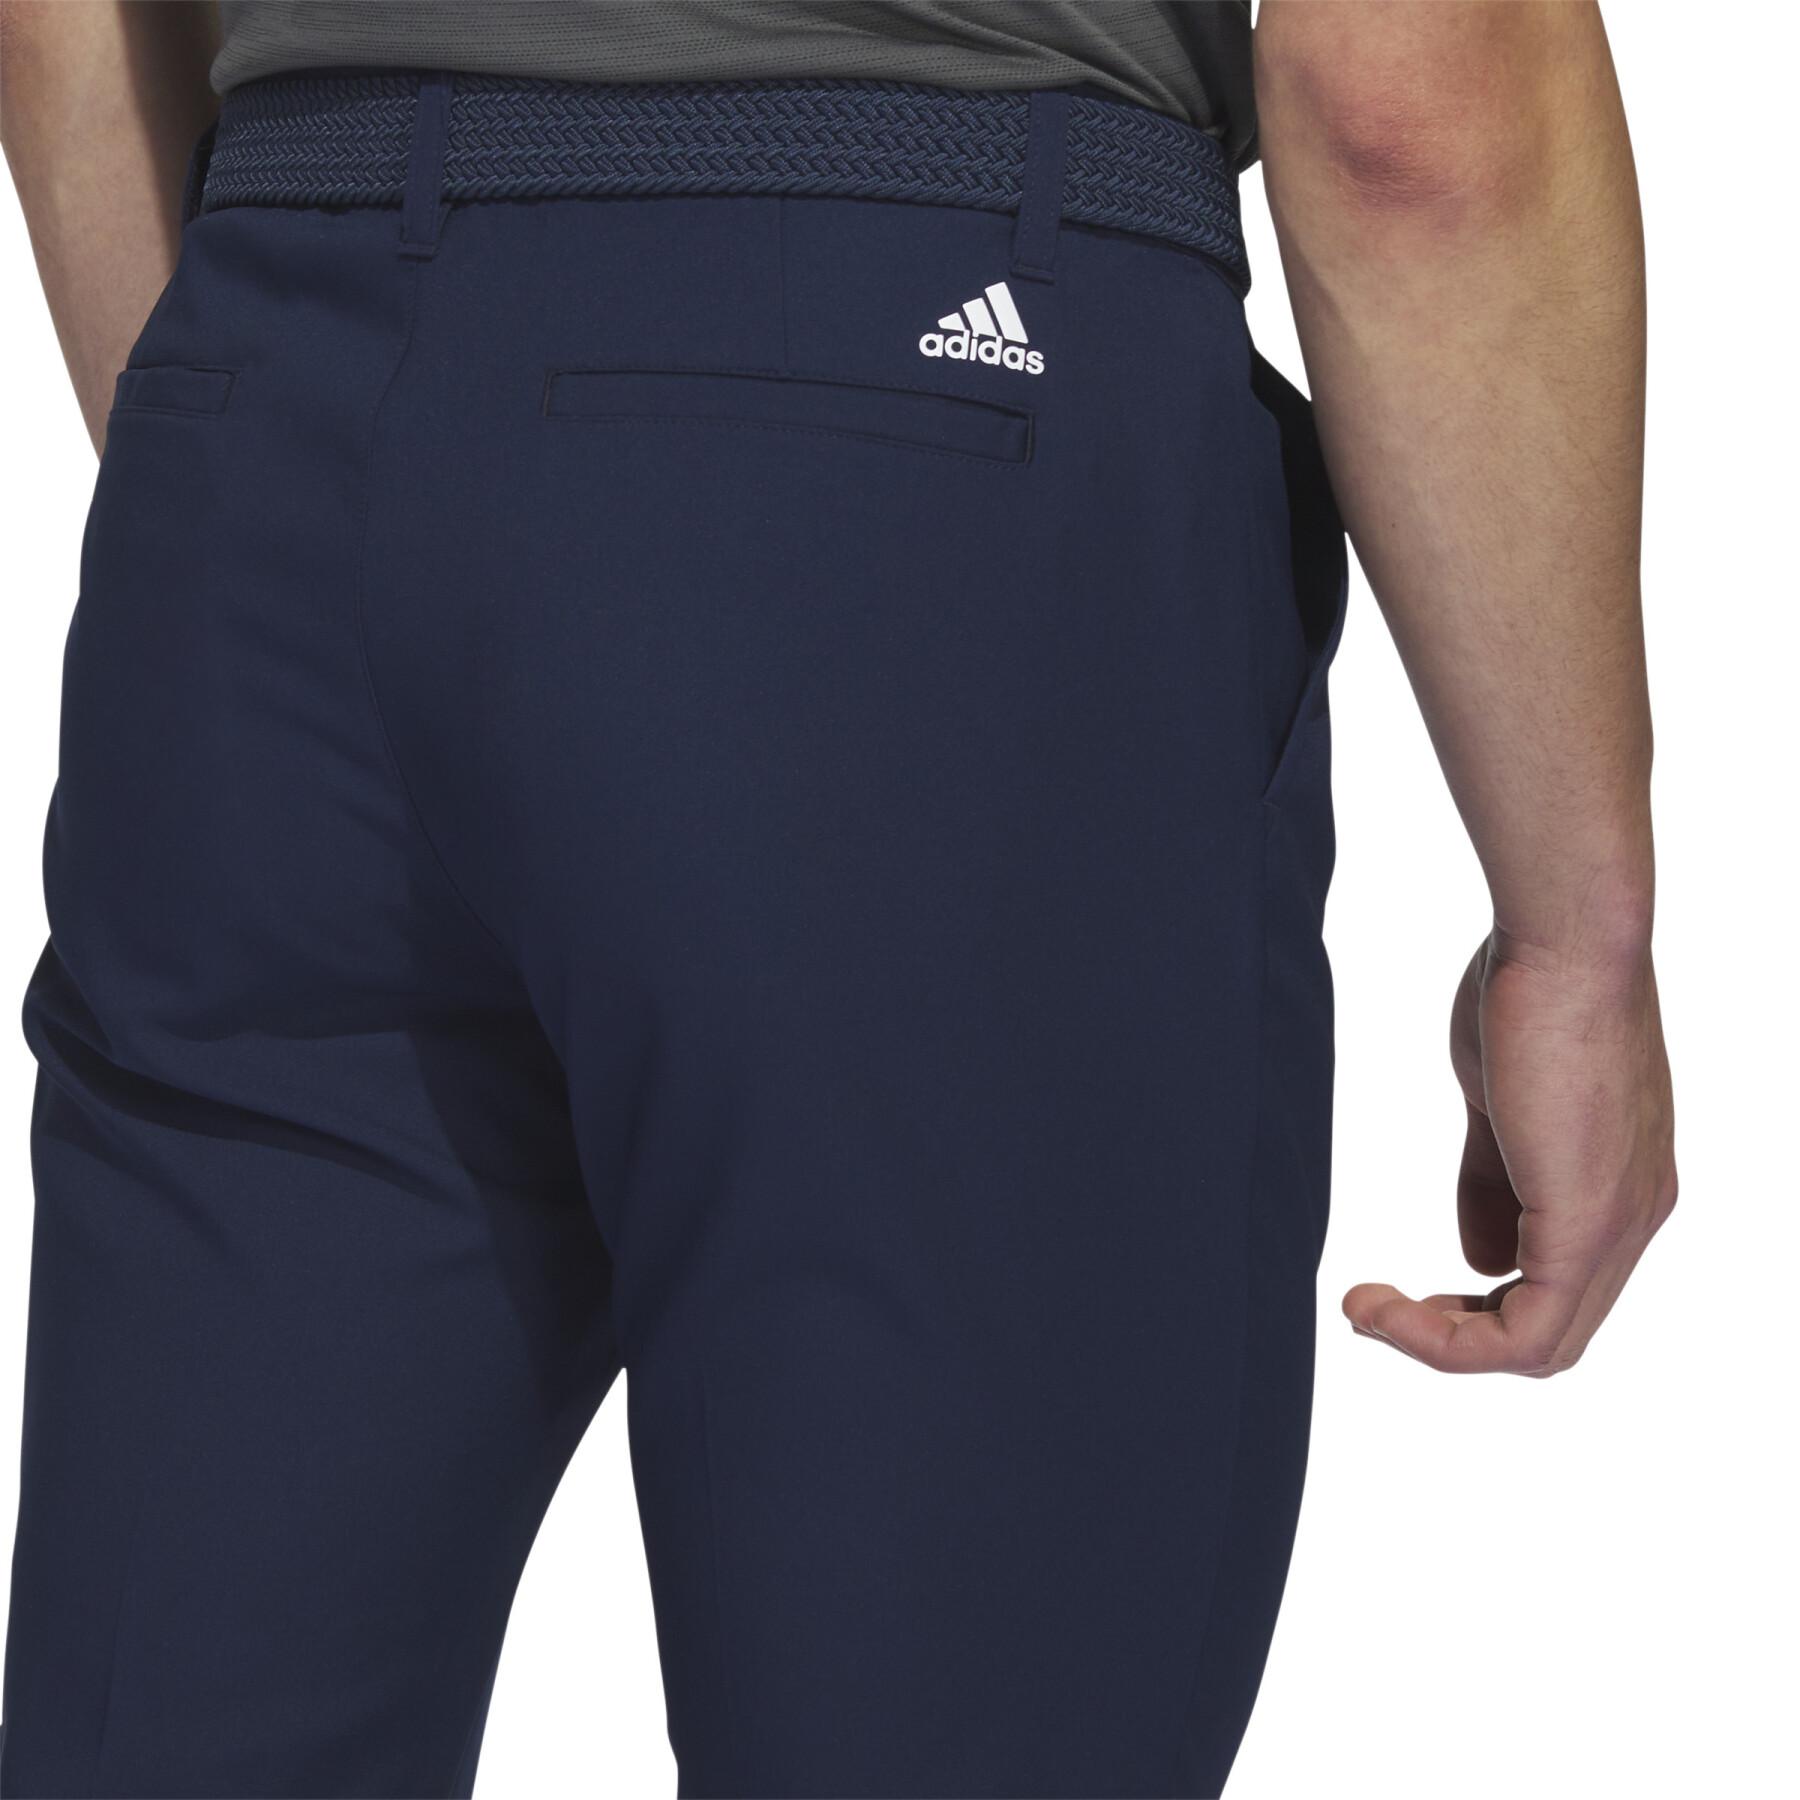 Spodnie typu Tapered adidas Ultimate365